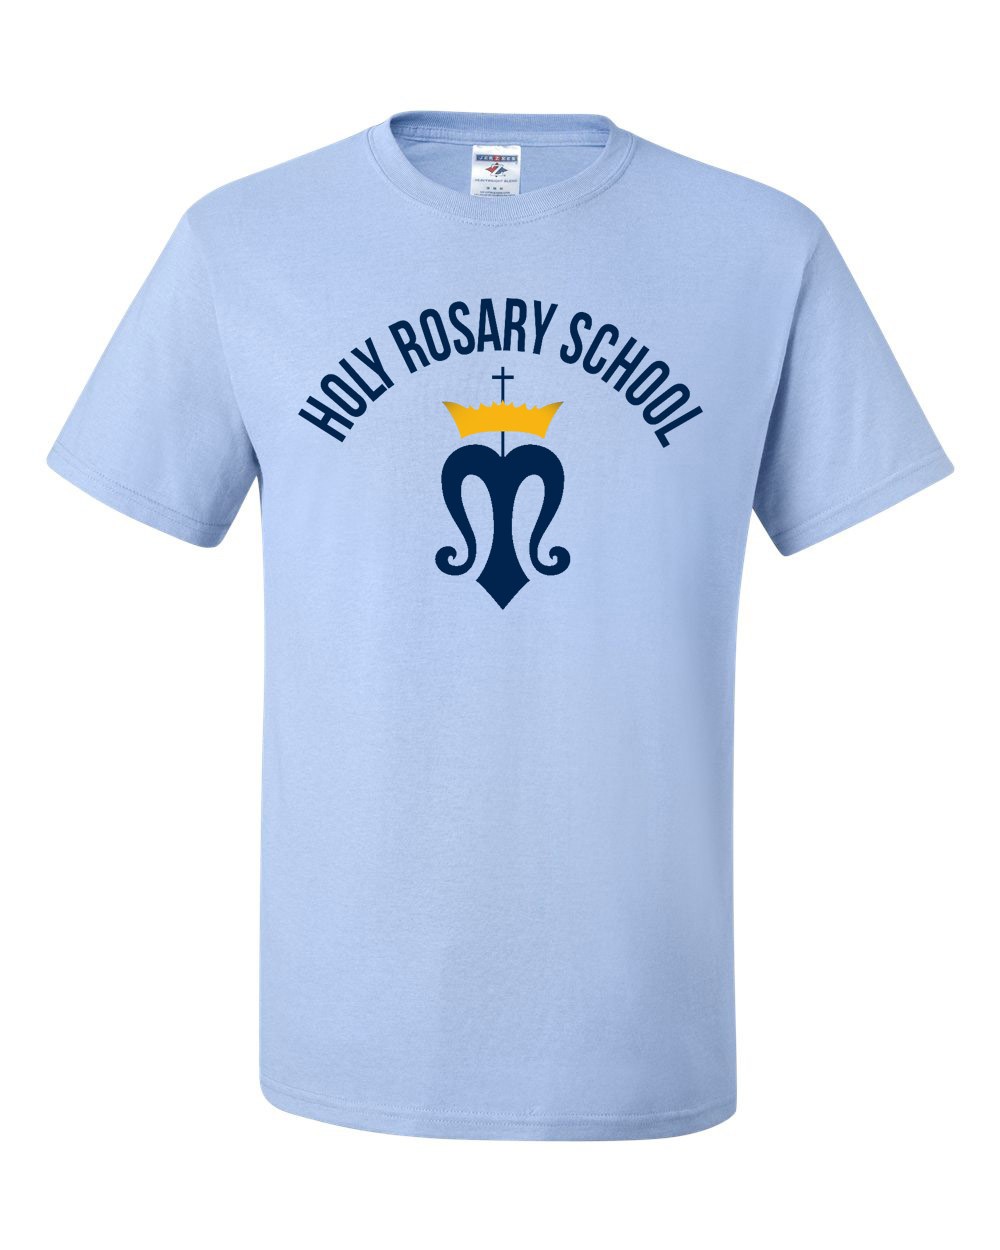 HRS S/S Gym T-Shirt w/ School Logo